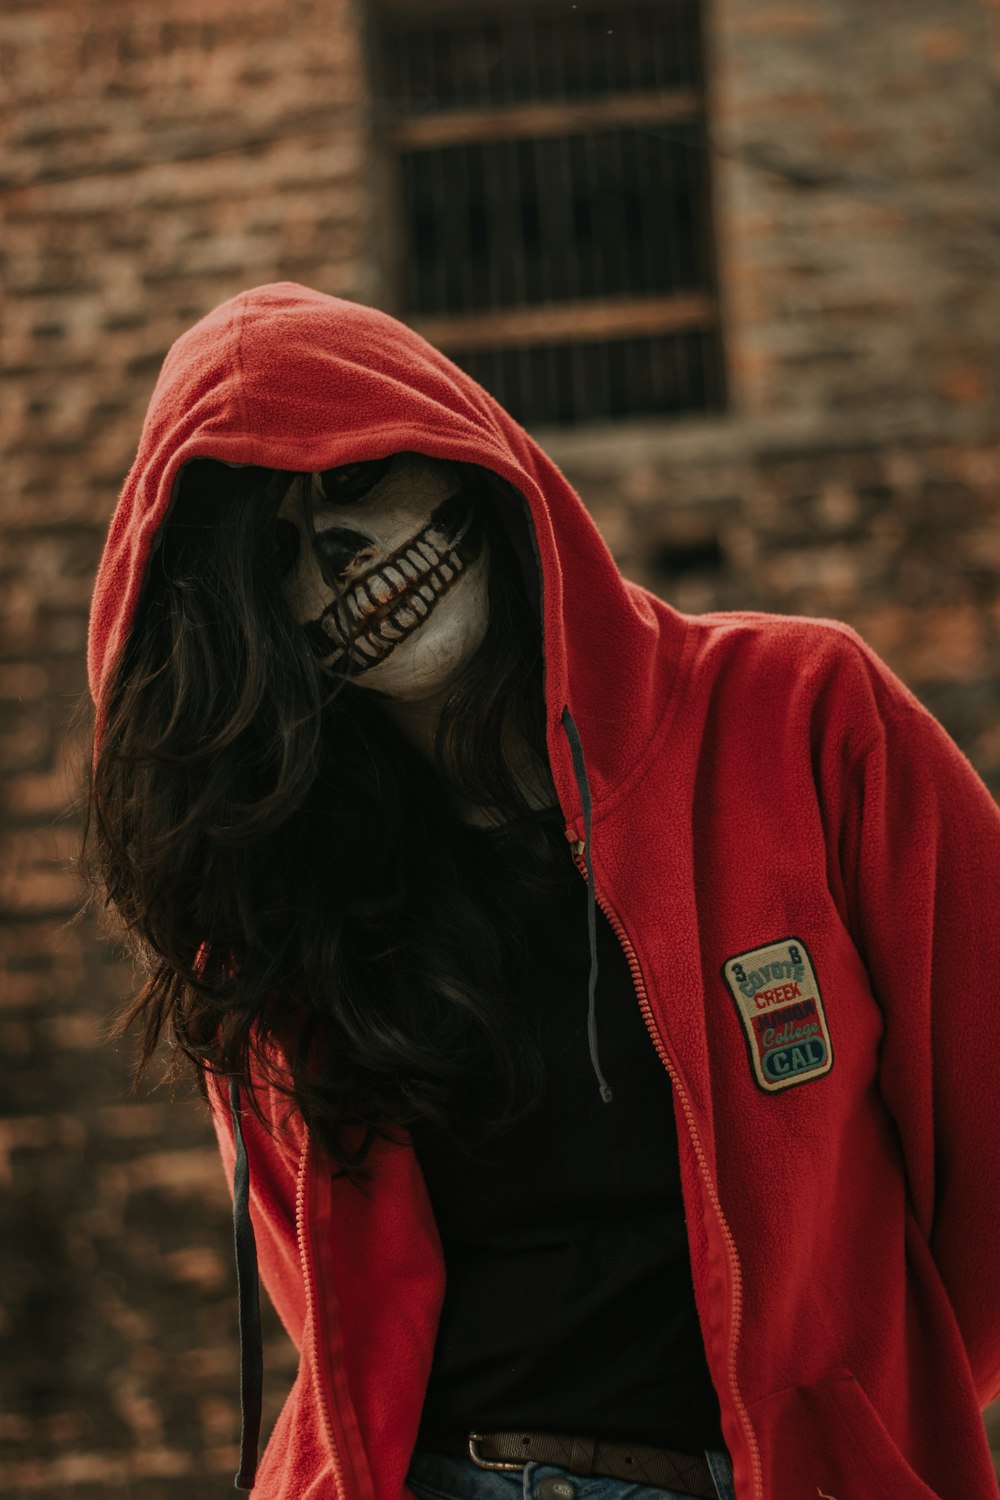 Woman in black hoodie photo – Free Facial Image on Unsplash